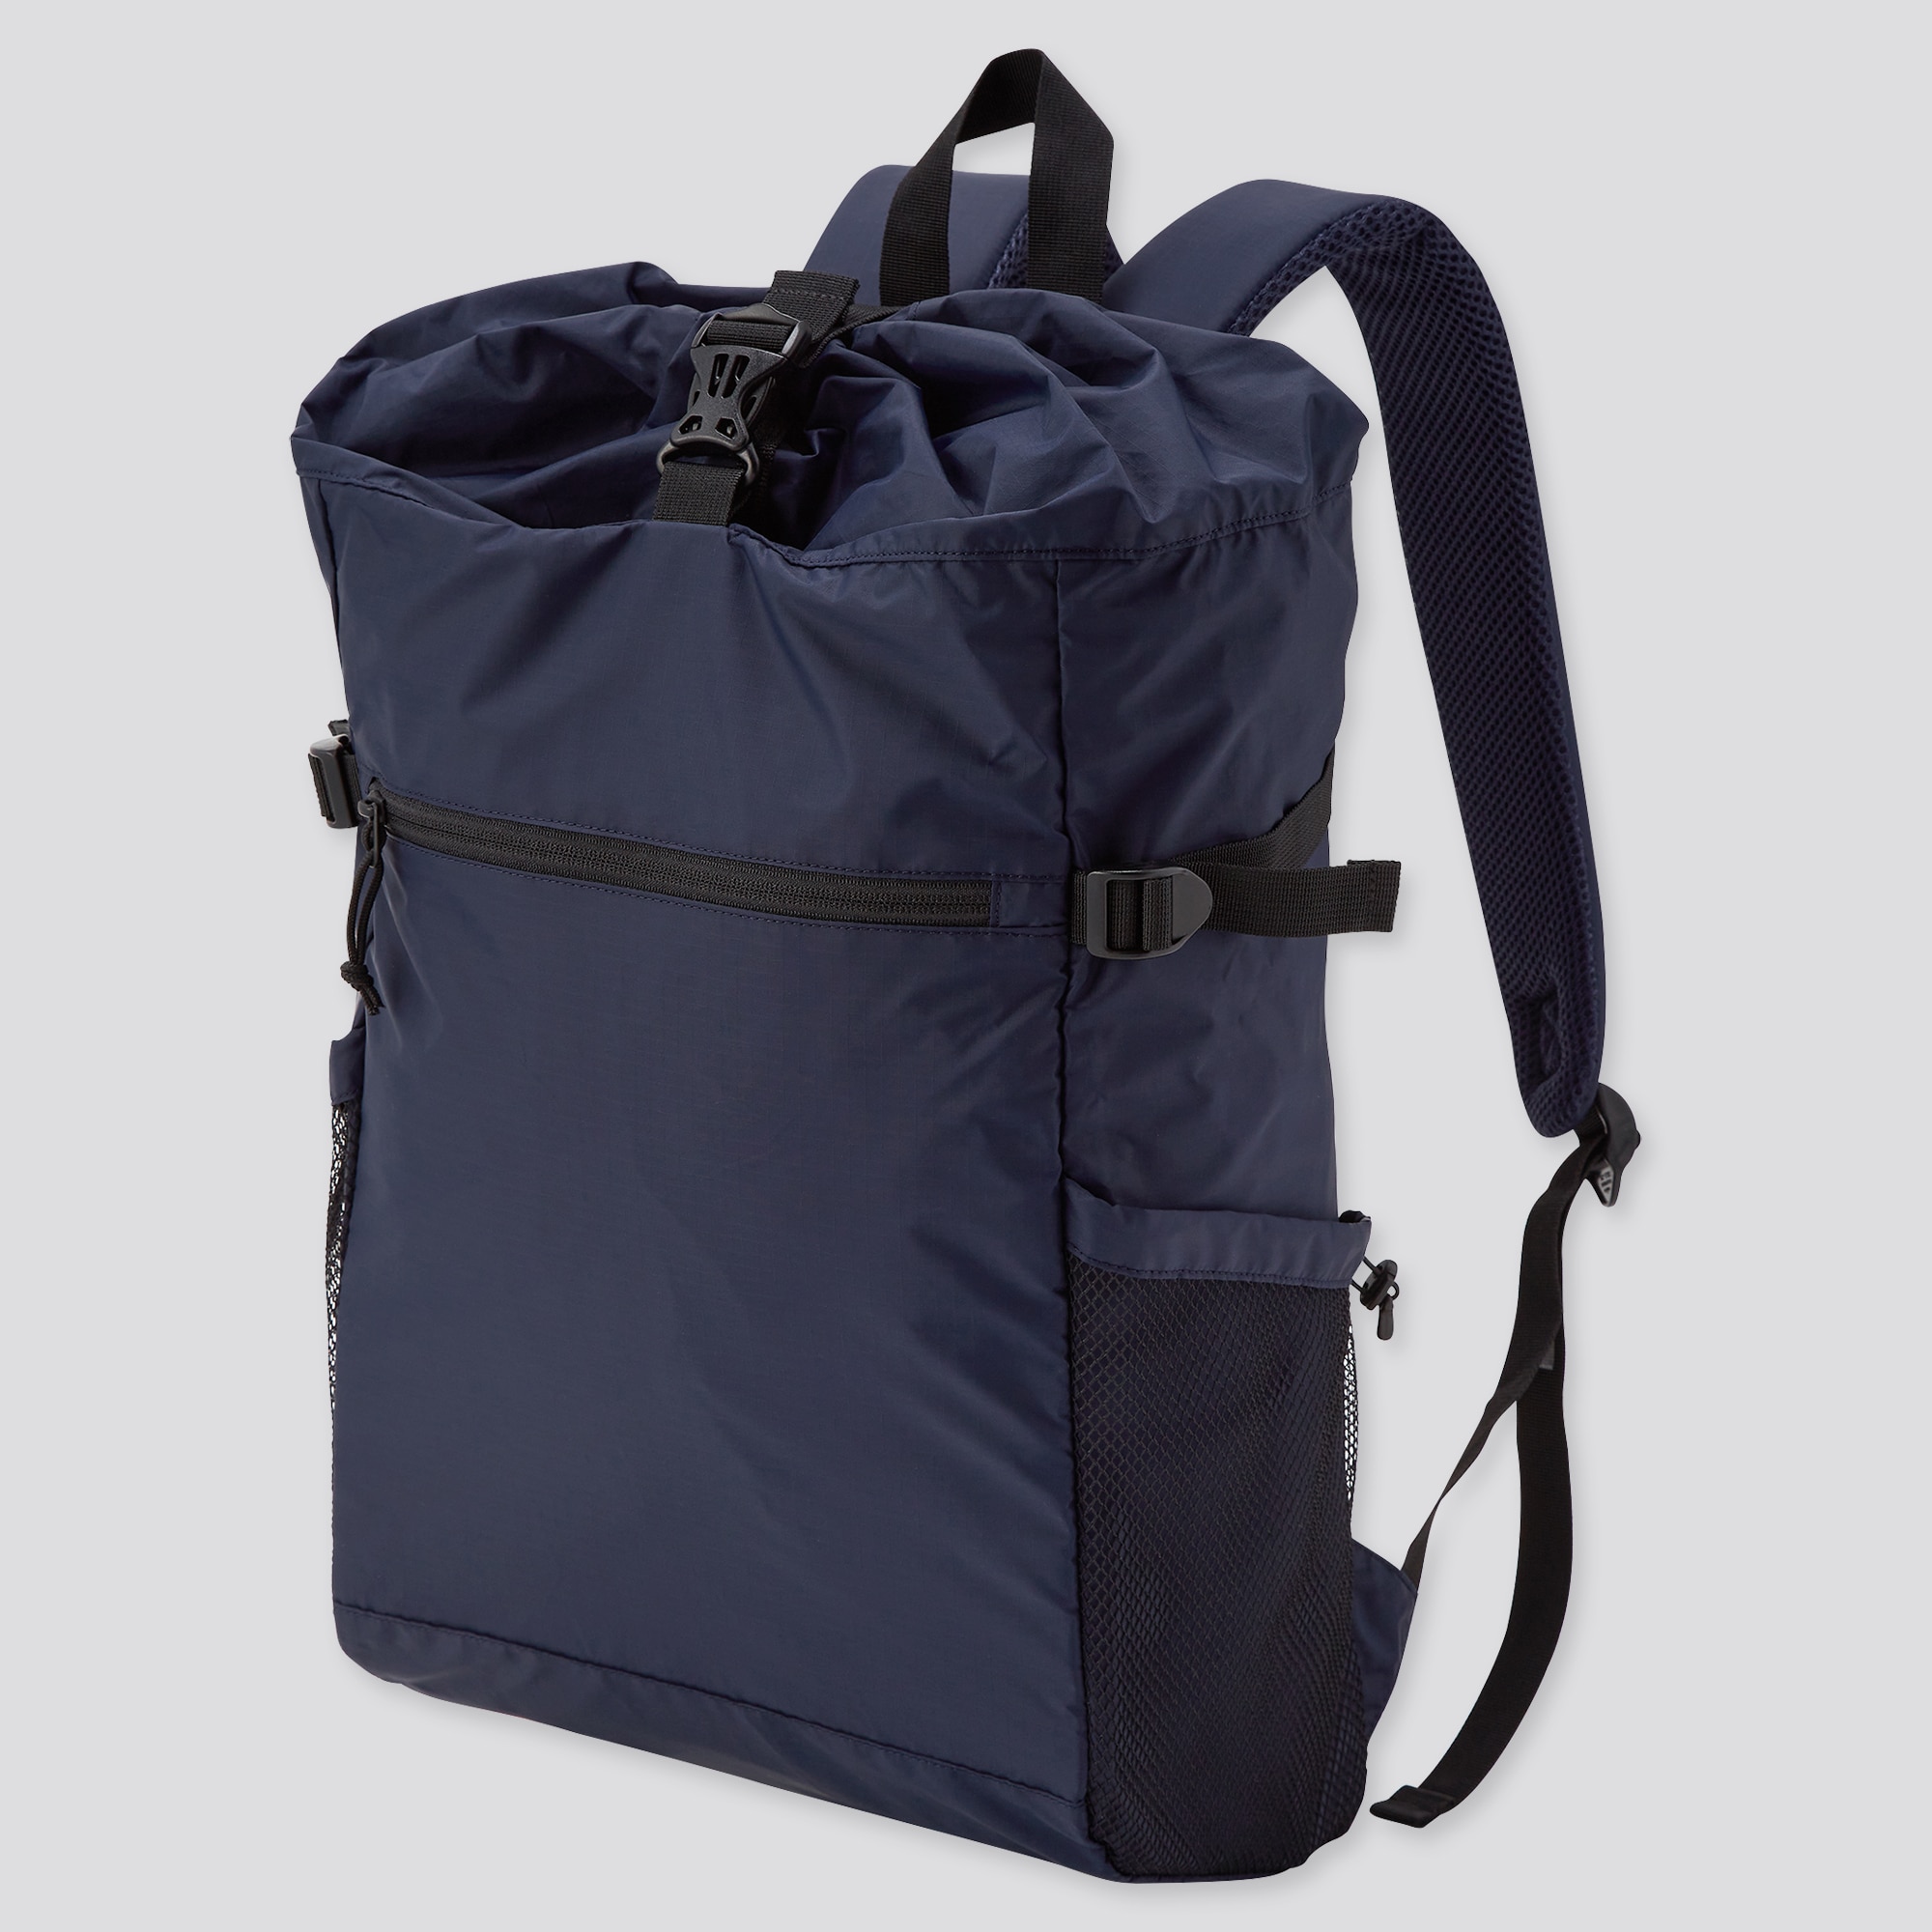 the lightest backpack